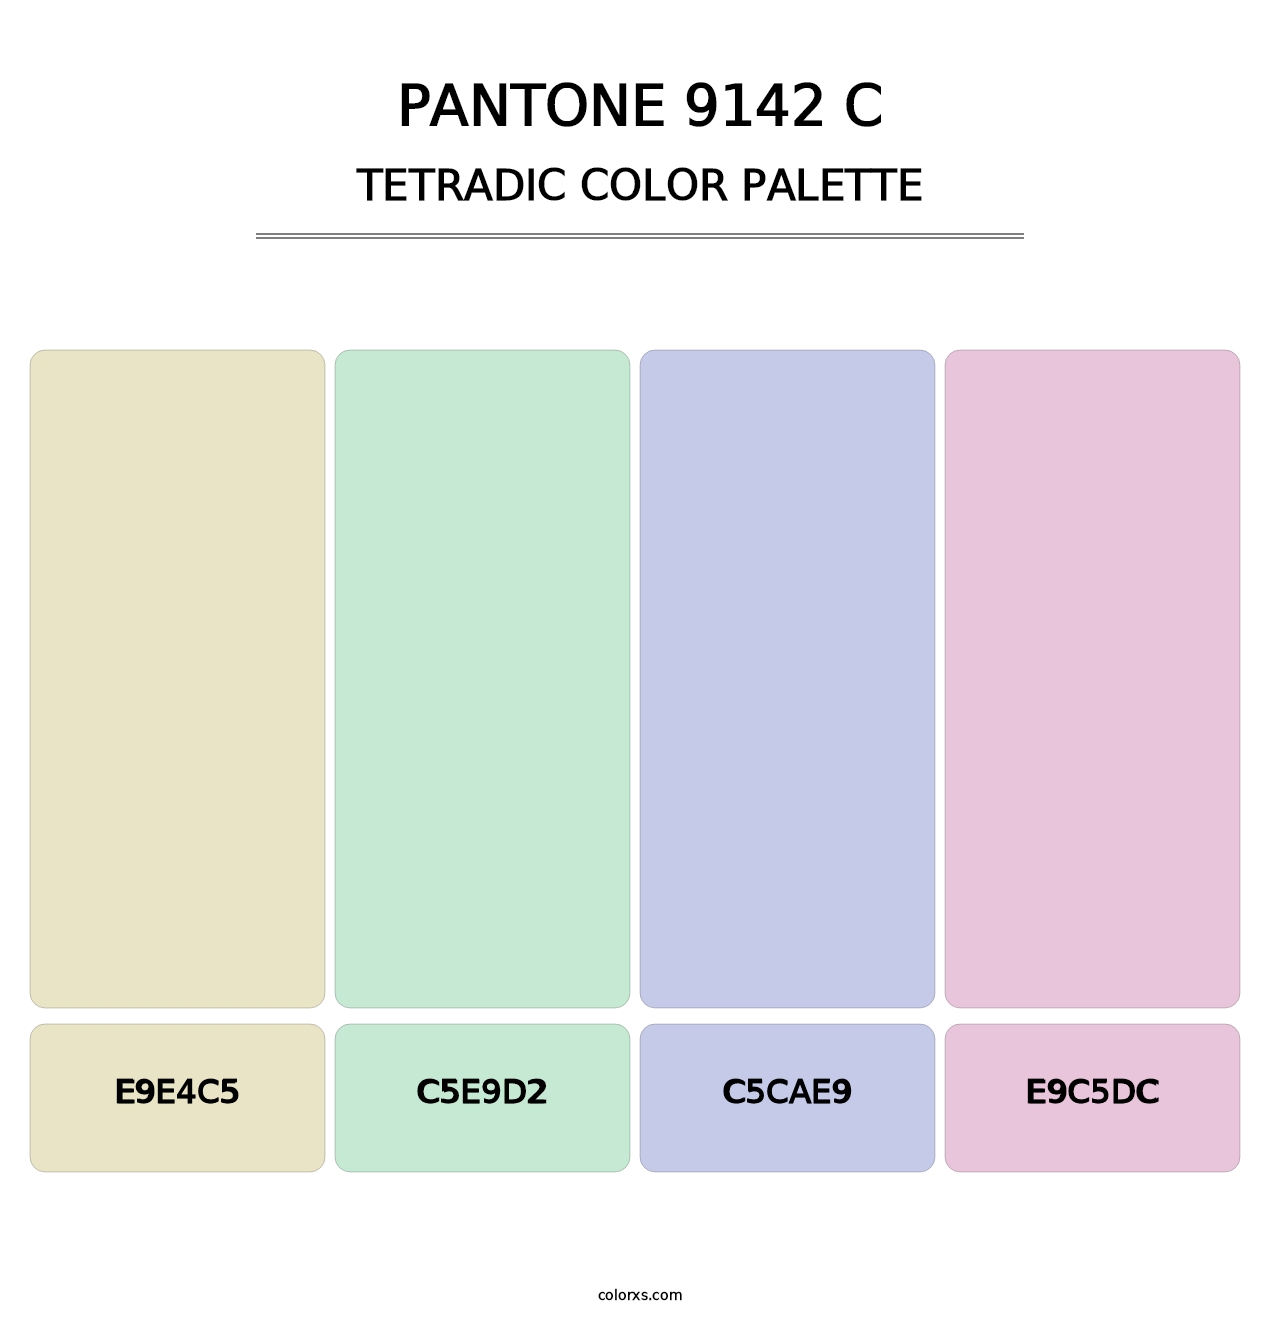 PANTONE 9142 C - Tetradic Color Palette